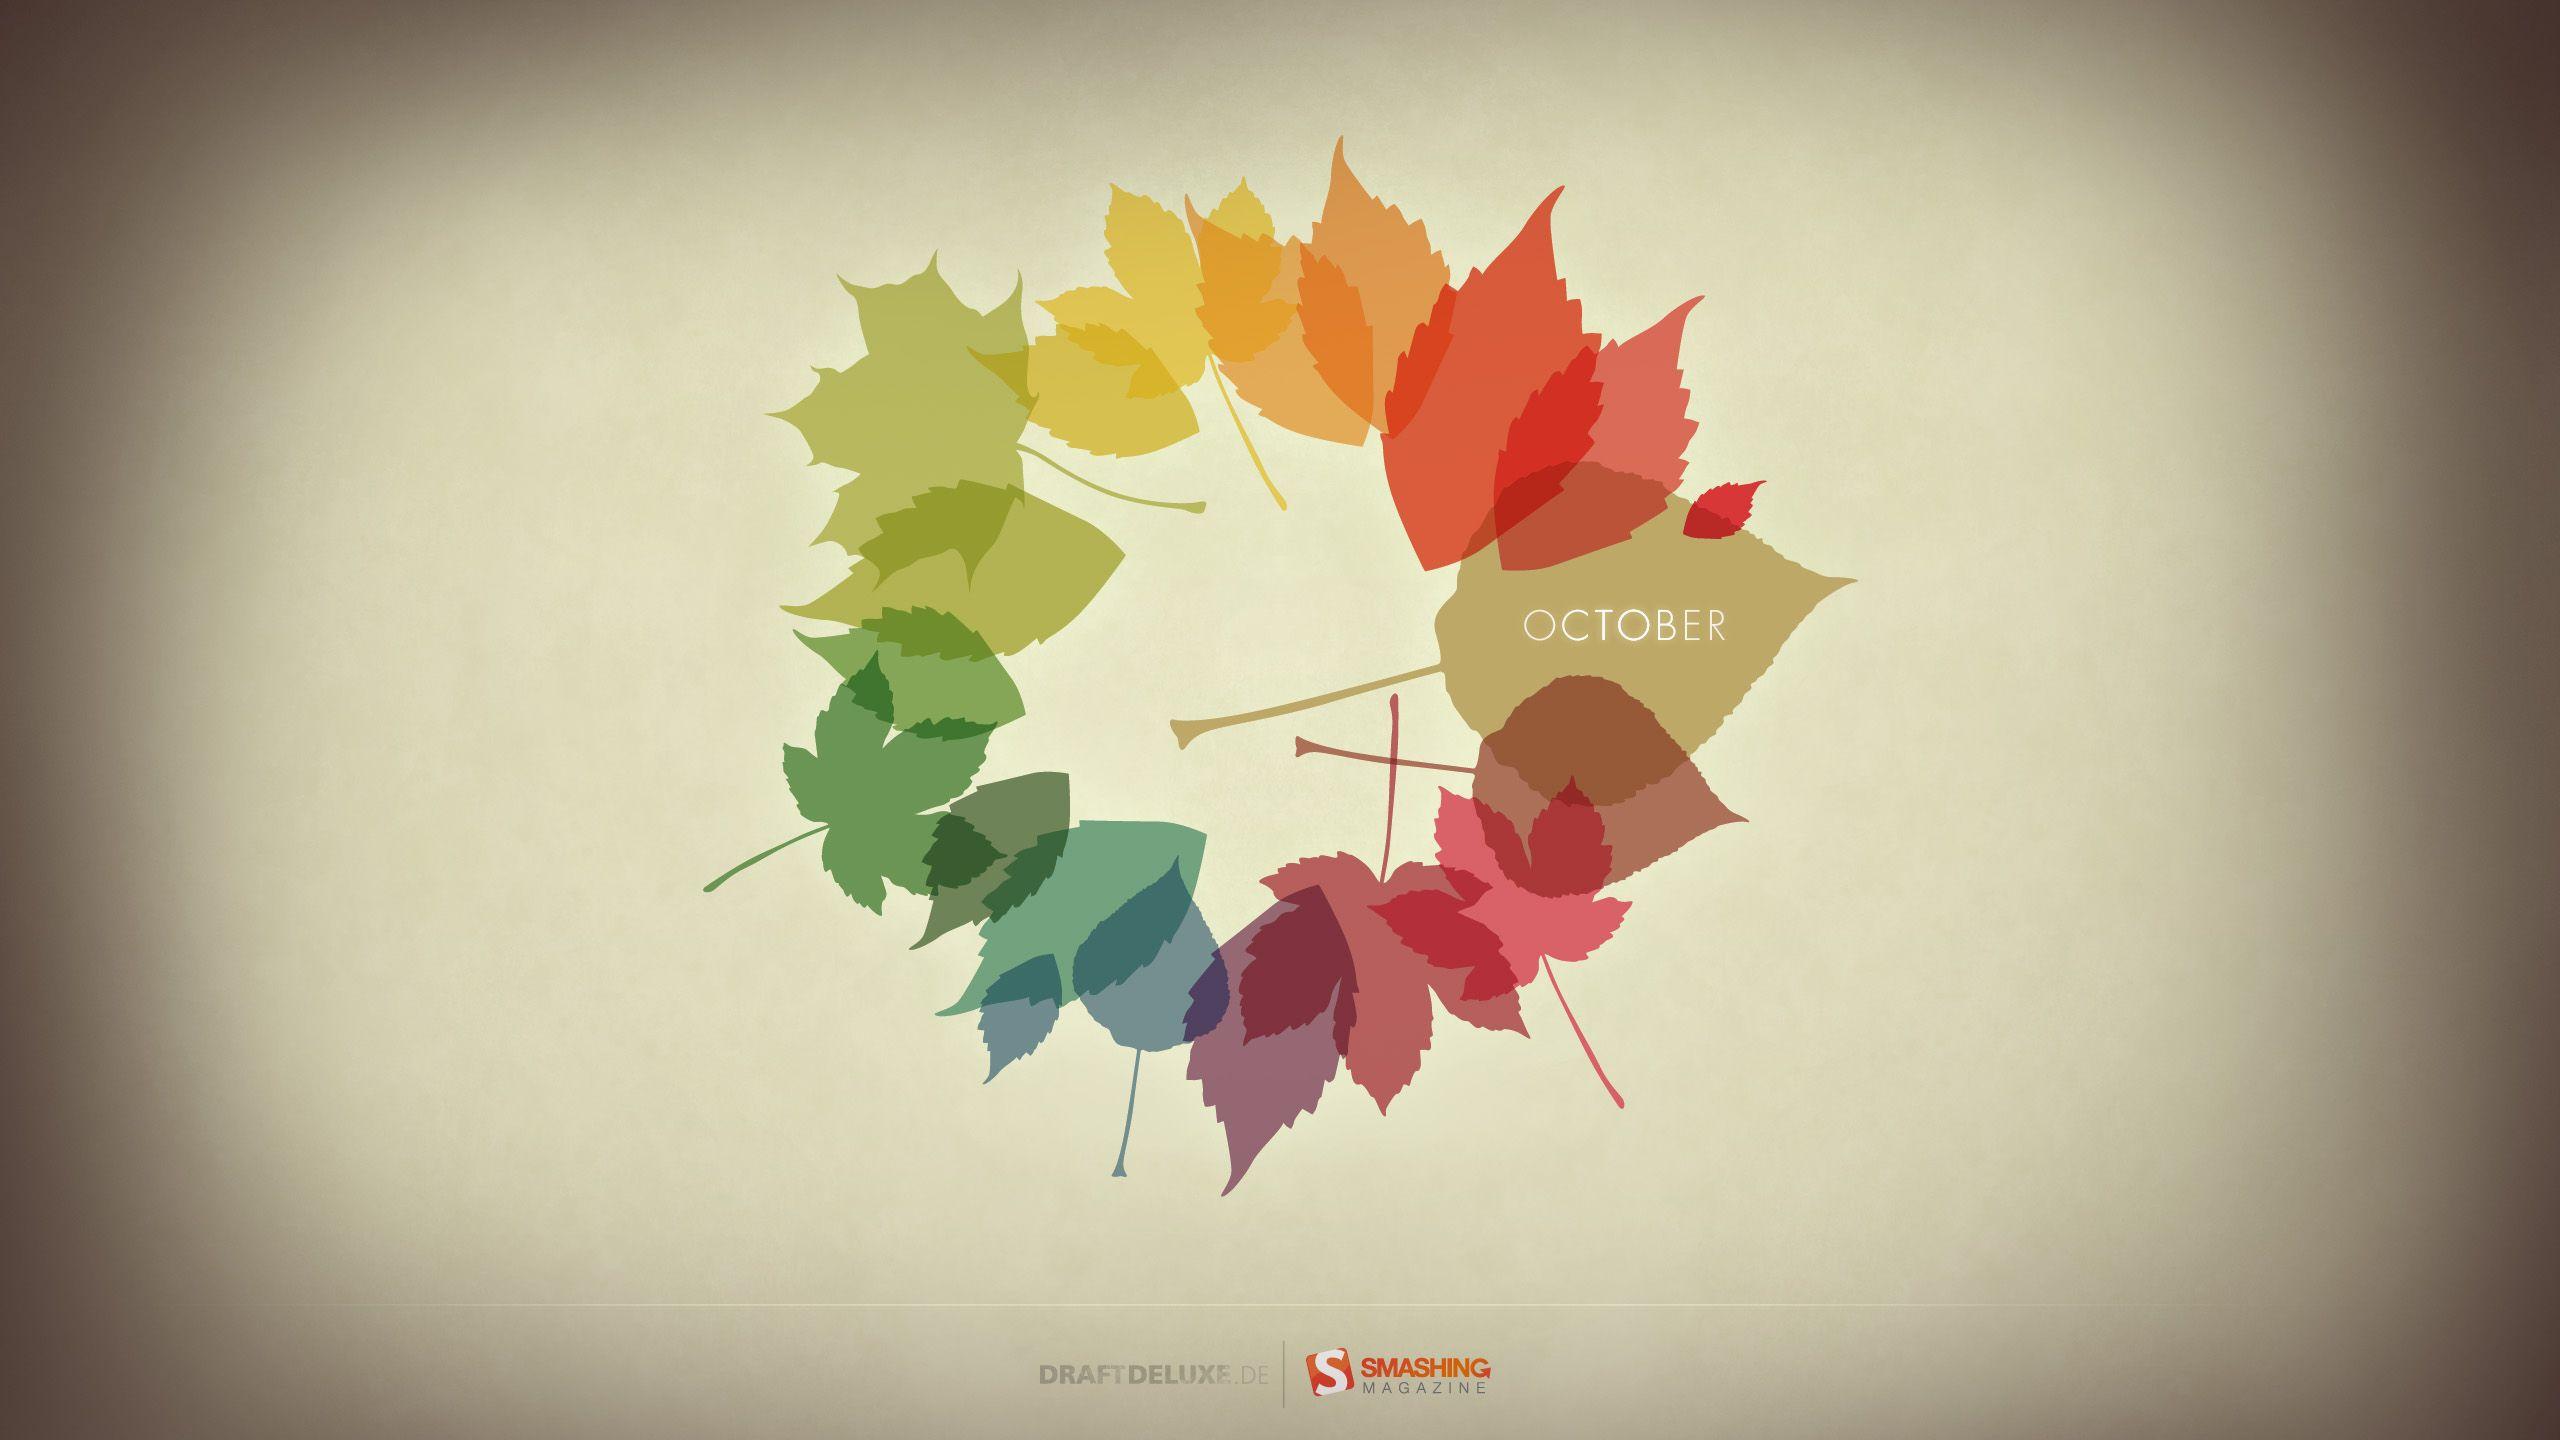 autumn, leaves, October, simple background, Smashing magazine, color spectrum wallpaper